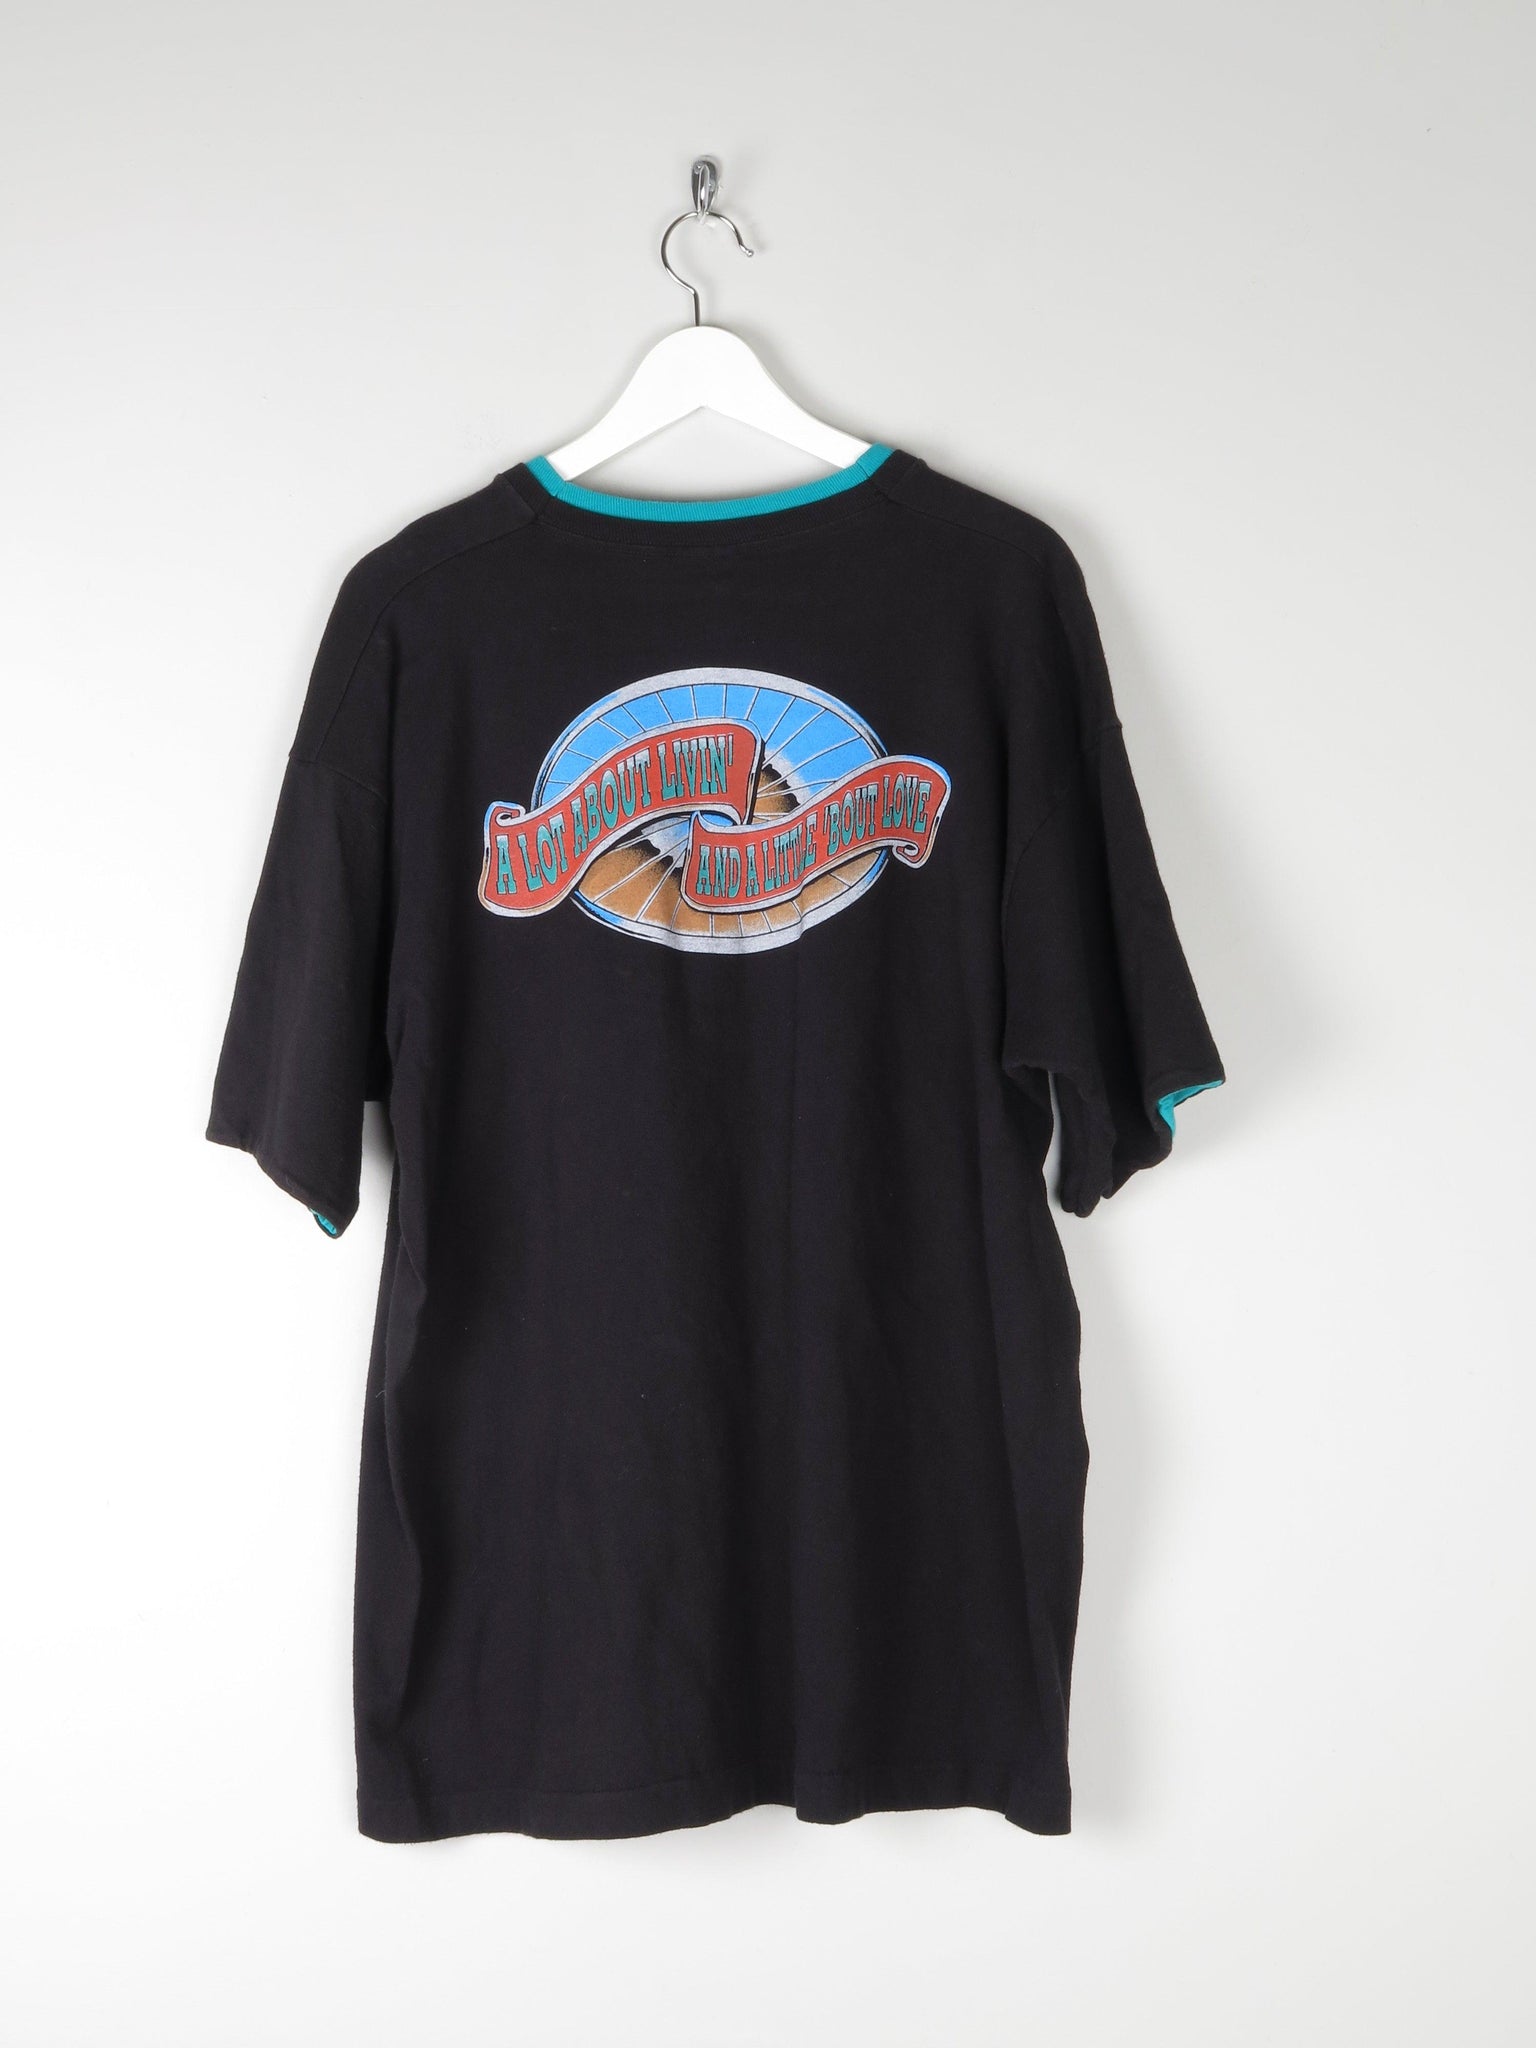 Men's Vintage Alan Jackson T-shirt XL - The Harlequin